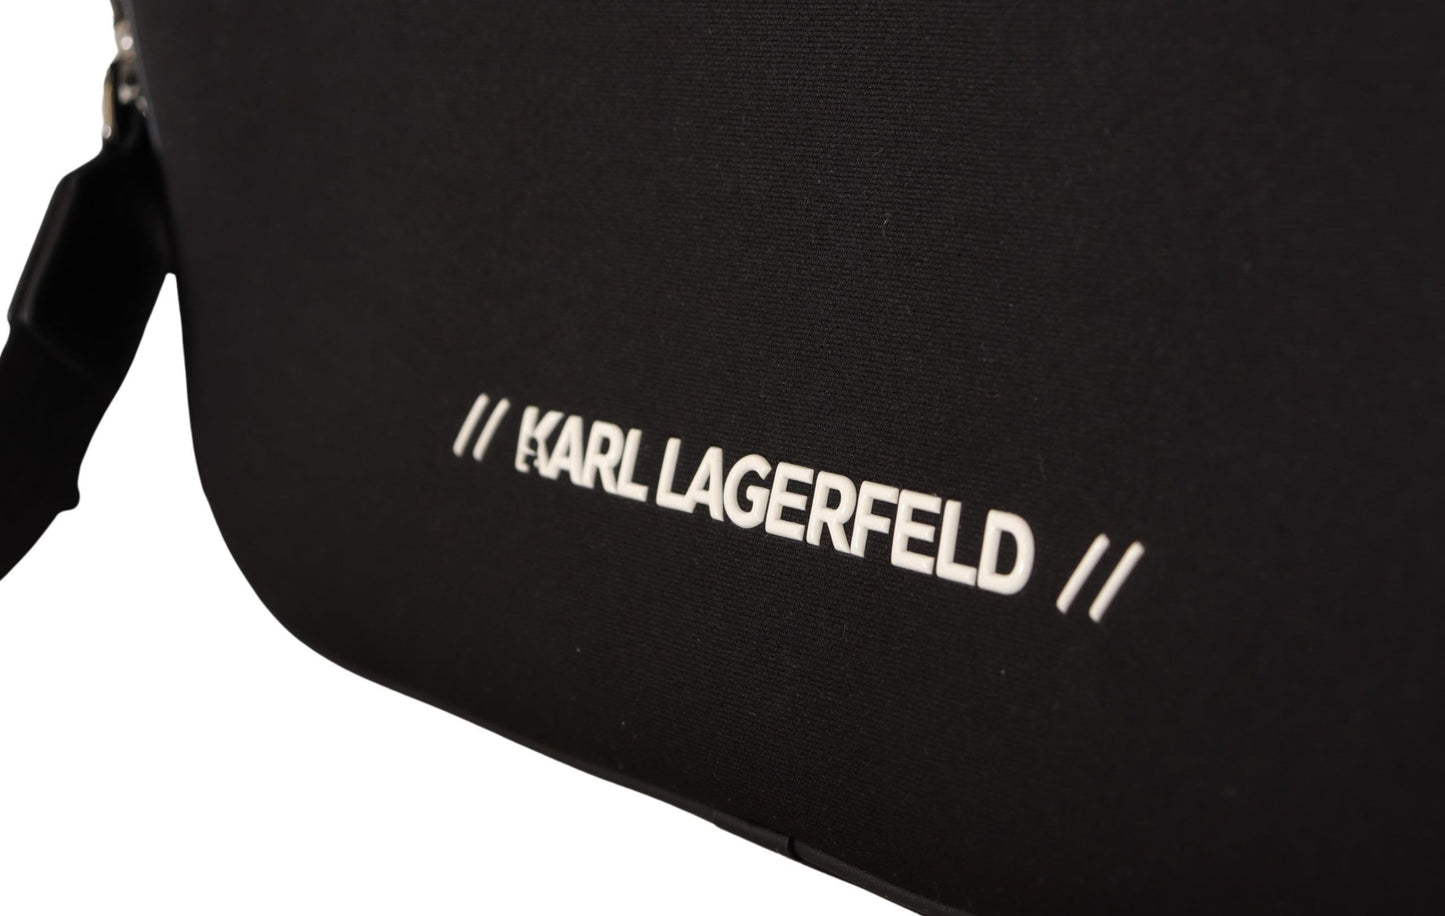 Karl Lagerfeld Black Nylon Laptop Crossbody Borse